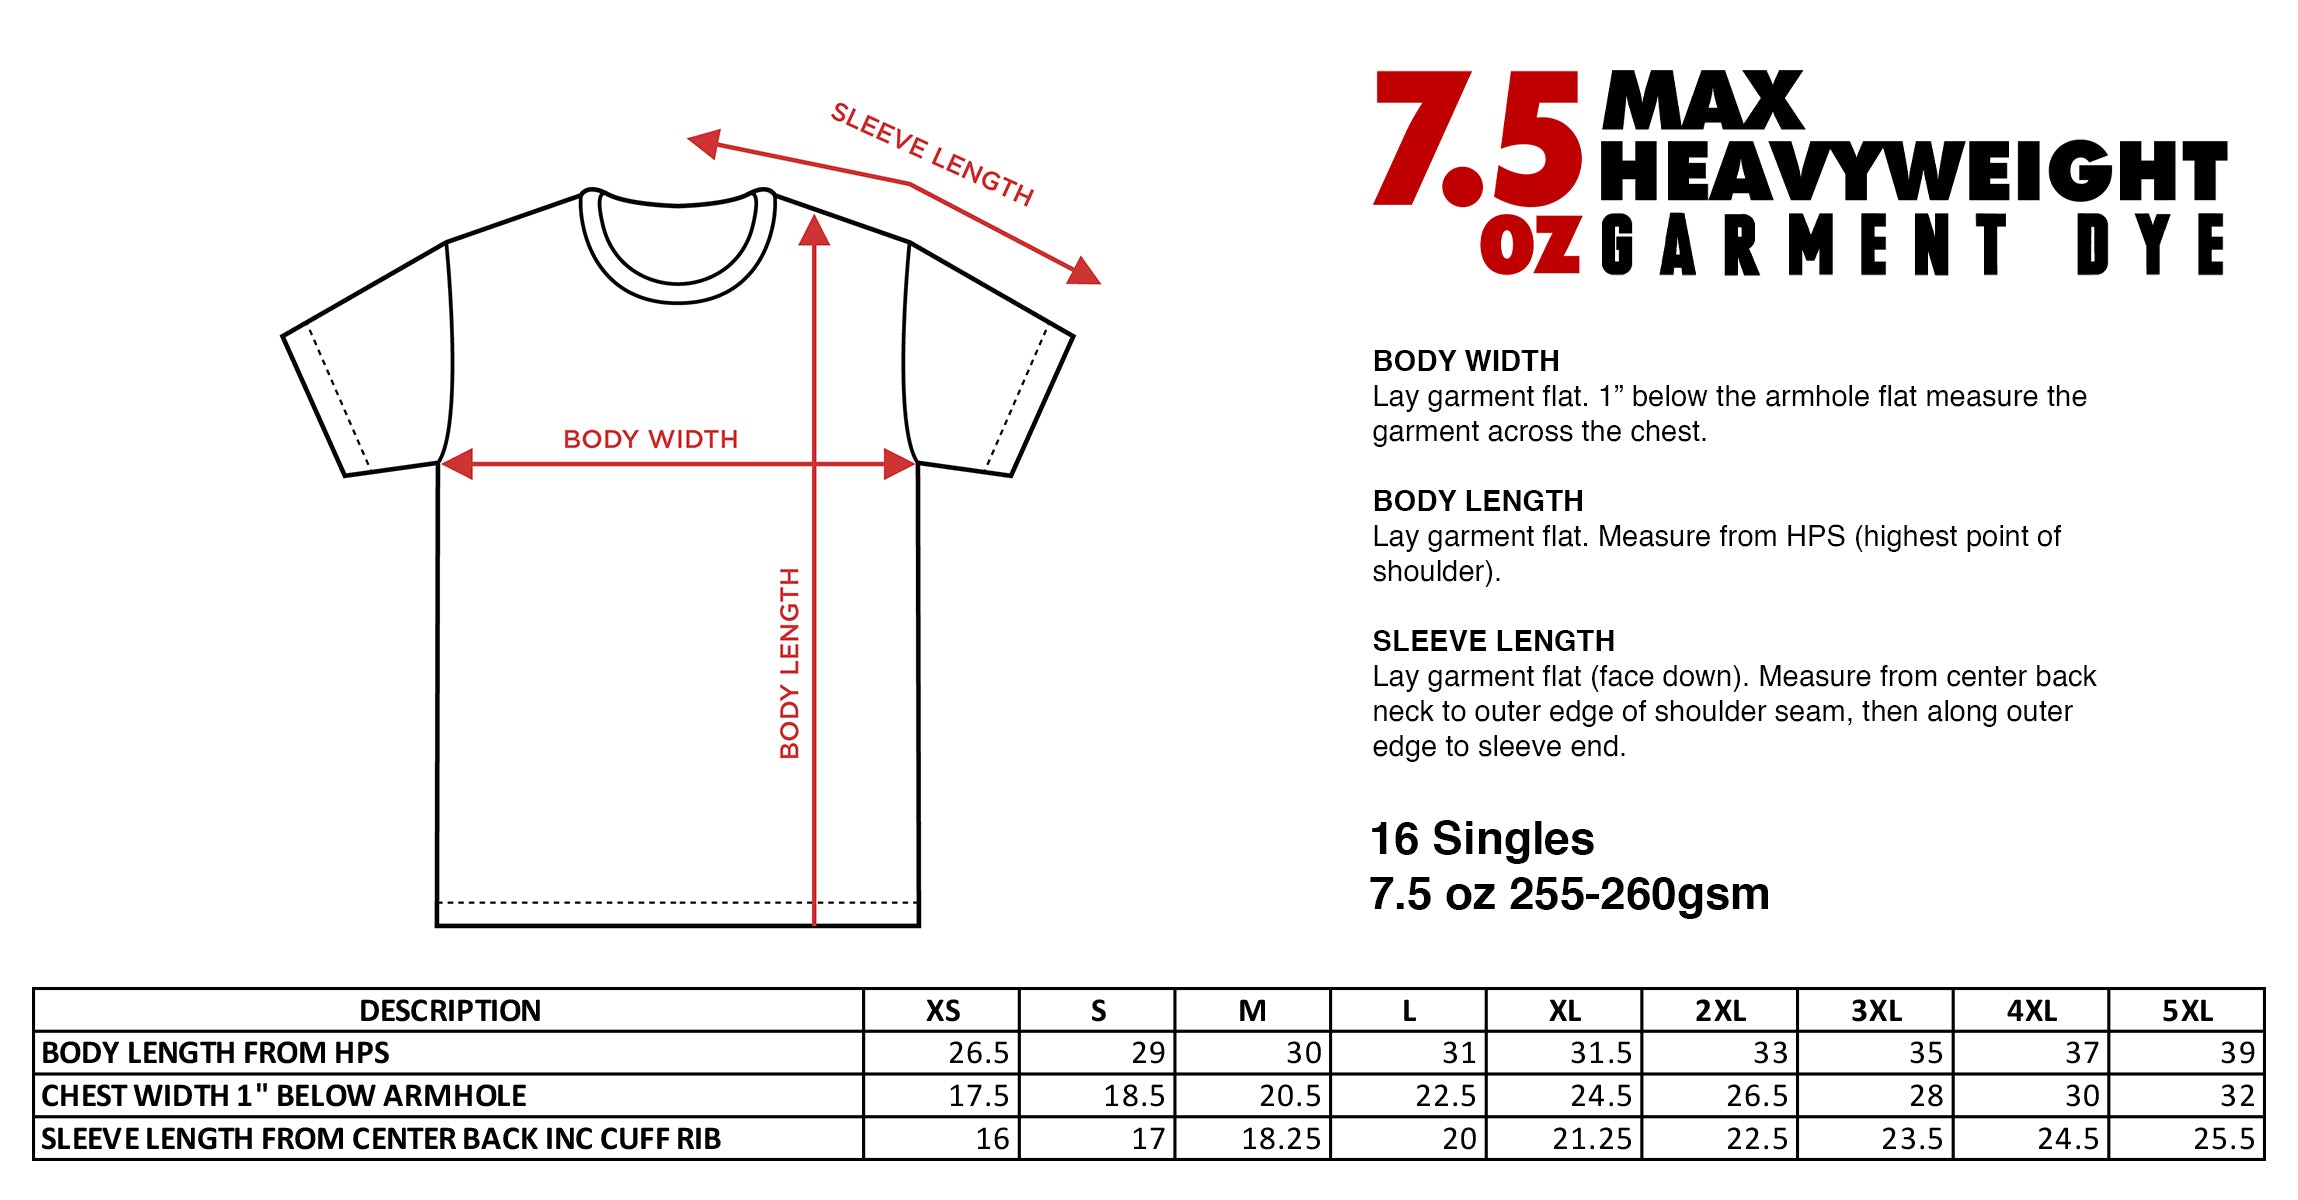 Max Heavyweight Garment Dye - Standard Sizes